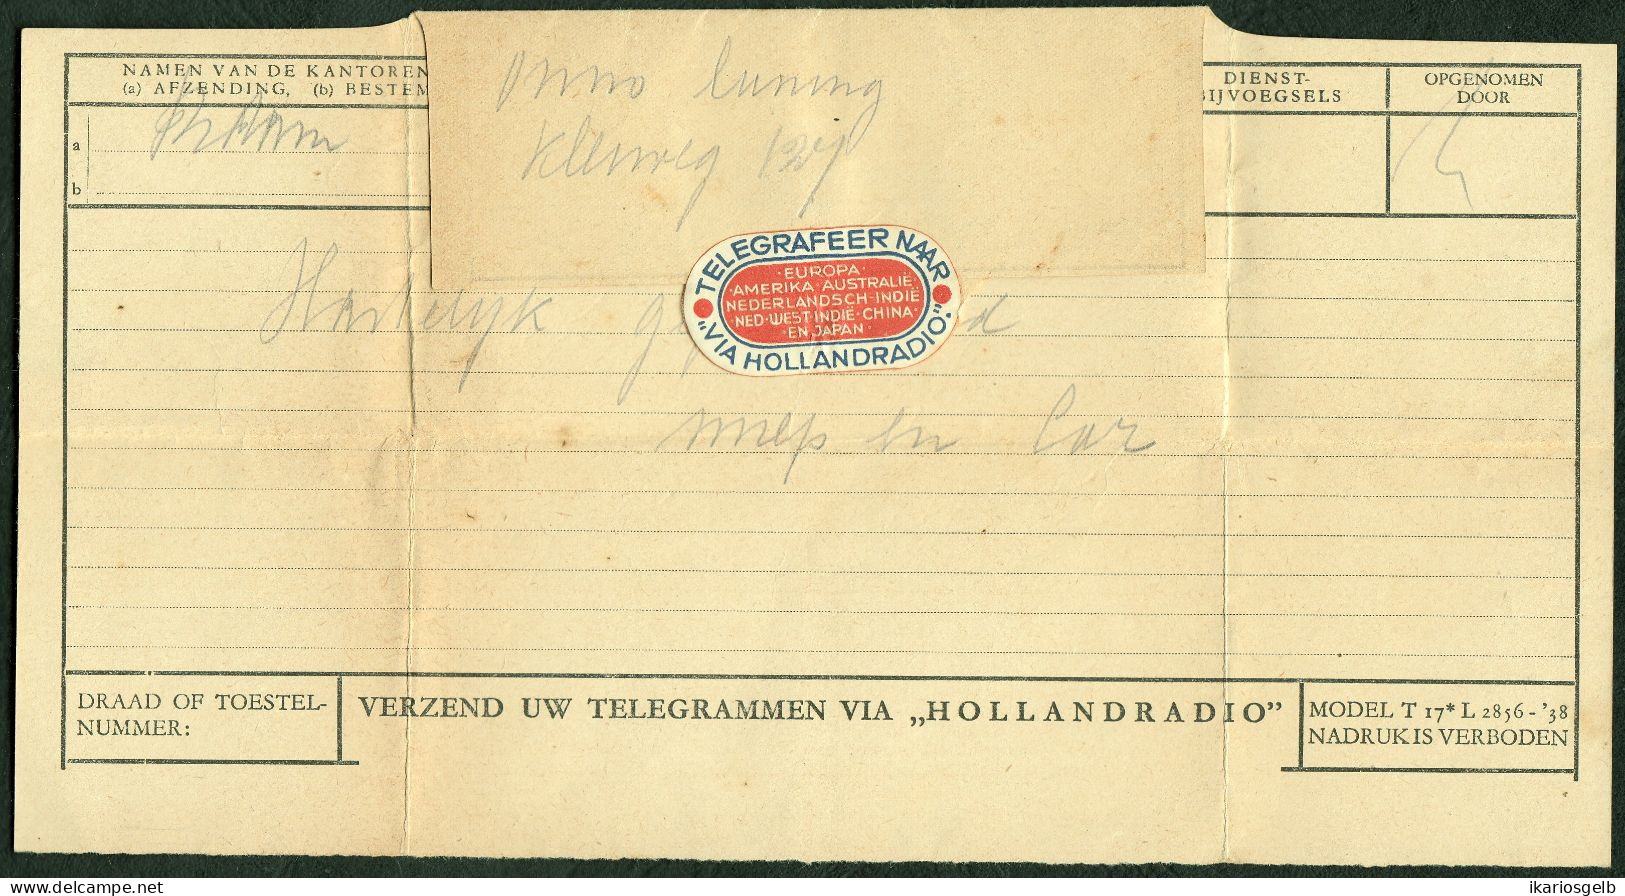 NEDERLAND 1933 Deco Telegramm Telegram + Private Telegraphenmarke "Via Hollandradio" Sluitzegel - Telegraph